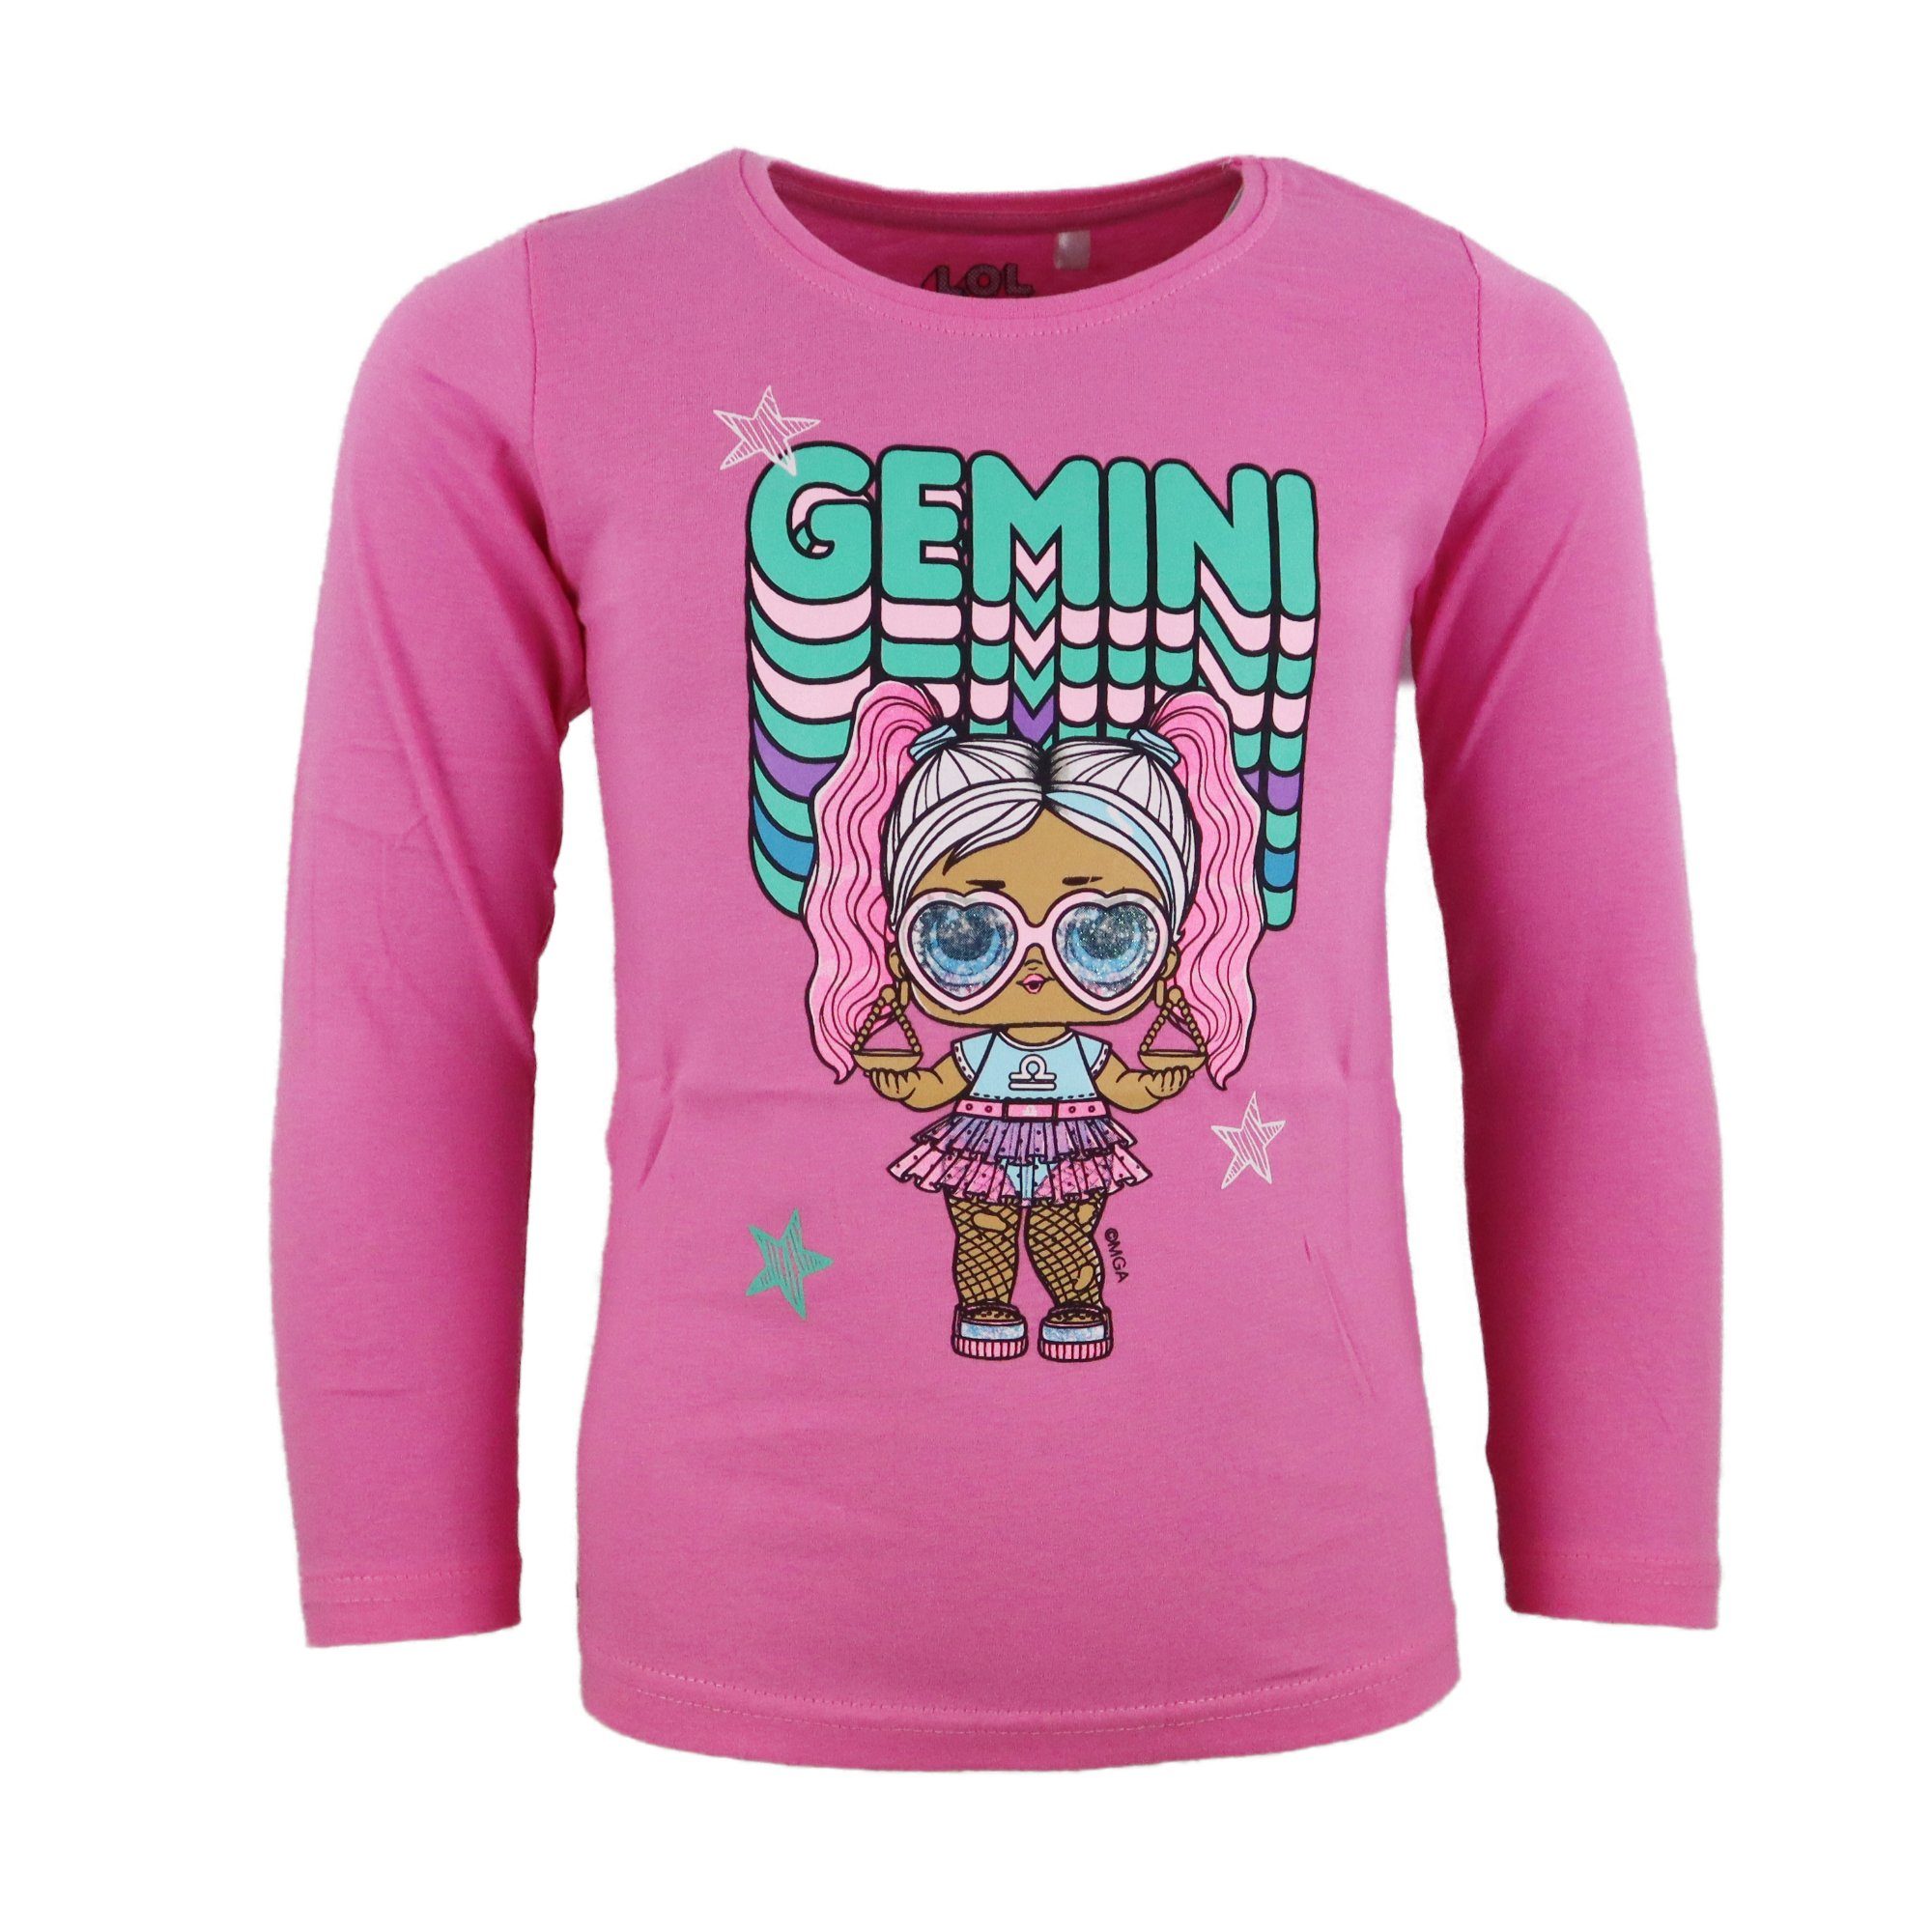 L.O.L. SURPRISE! Langarmshirt LOL Surprise Gemini Kinder Mädchen Shirt Gr. 98 bis 128, 100% Baumwolle